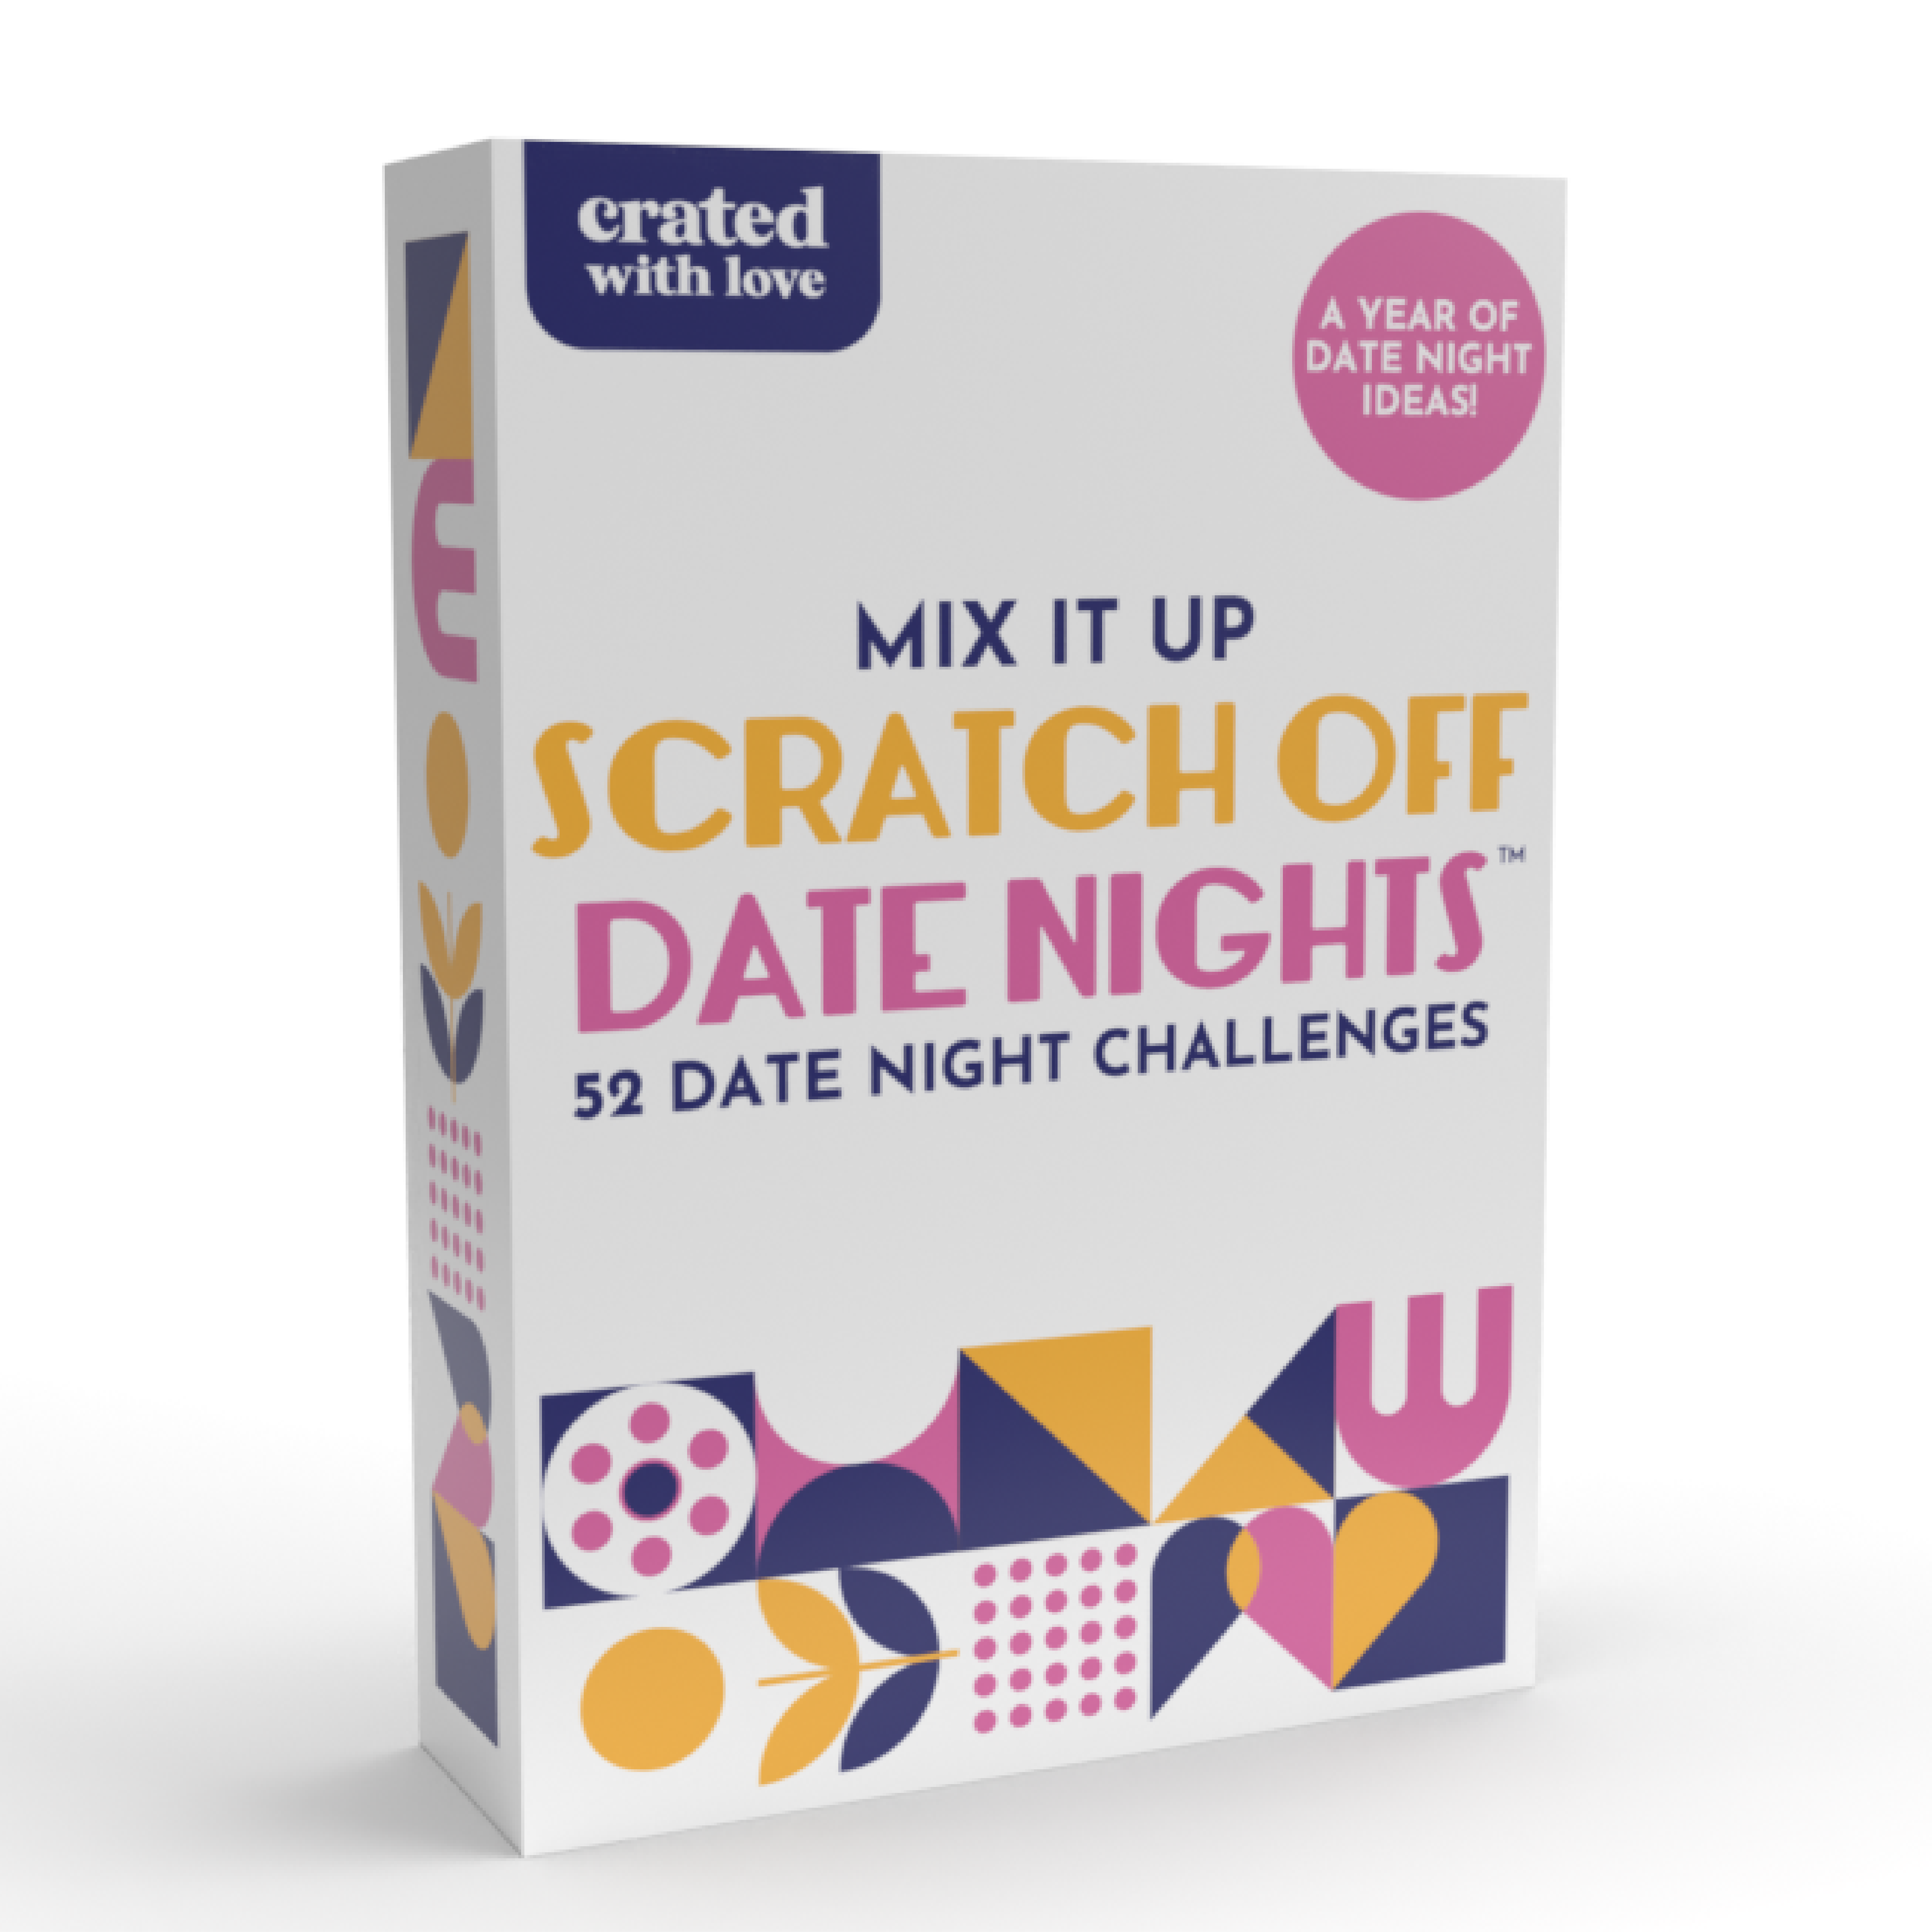 Mix It Up Scratch Off Date Nights